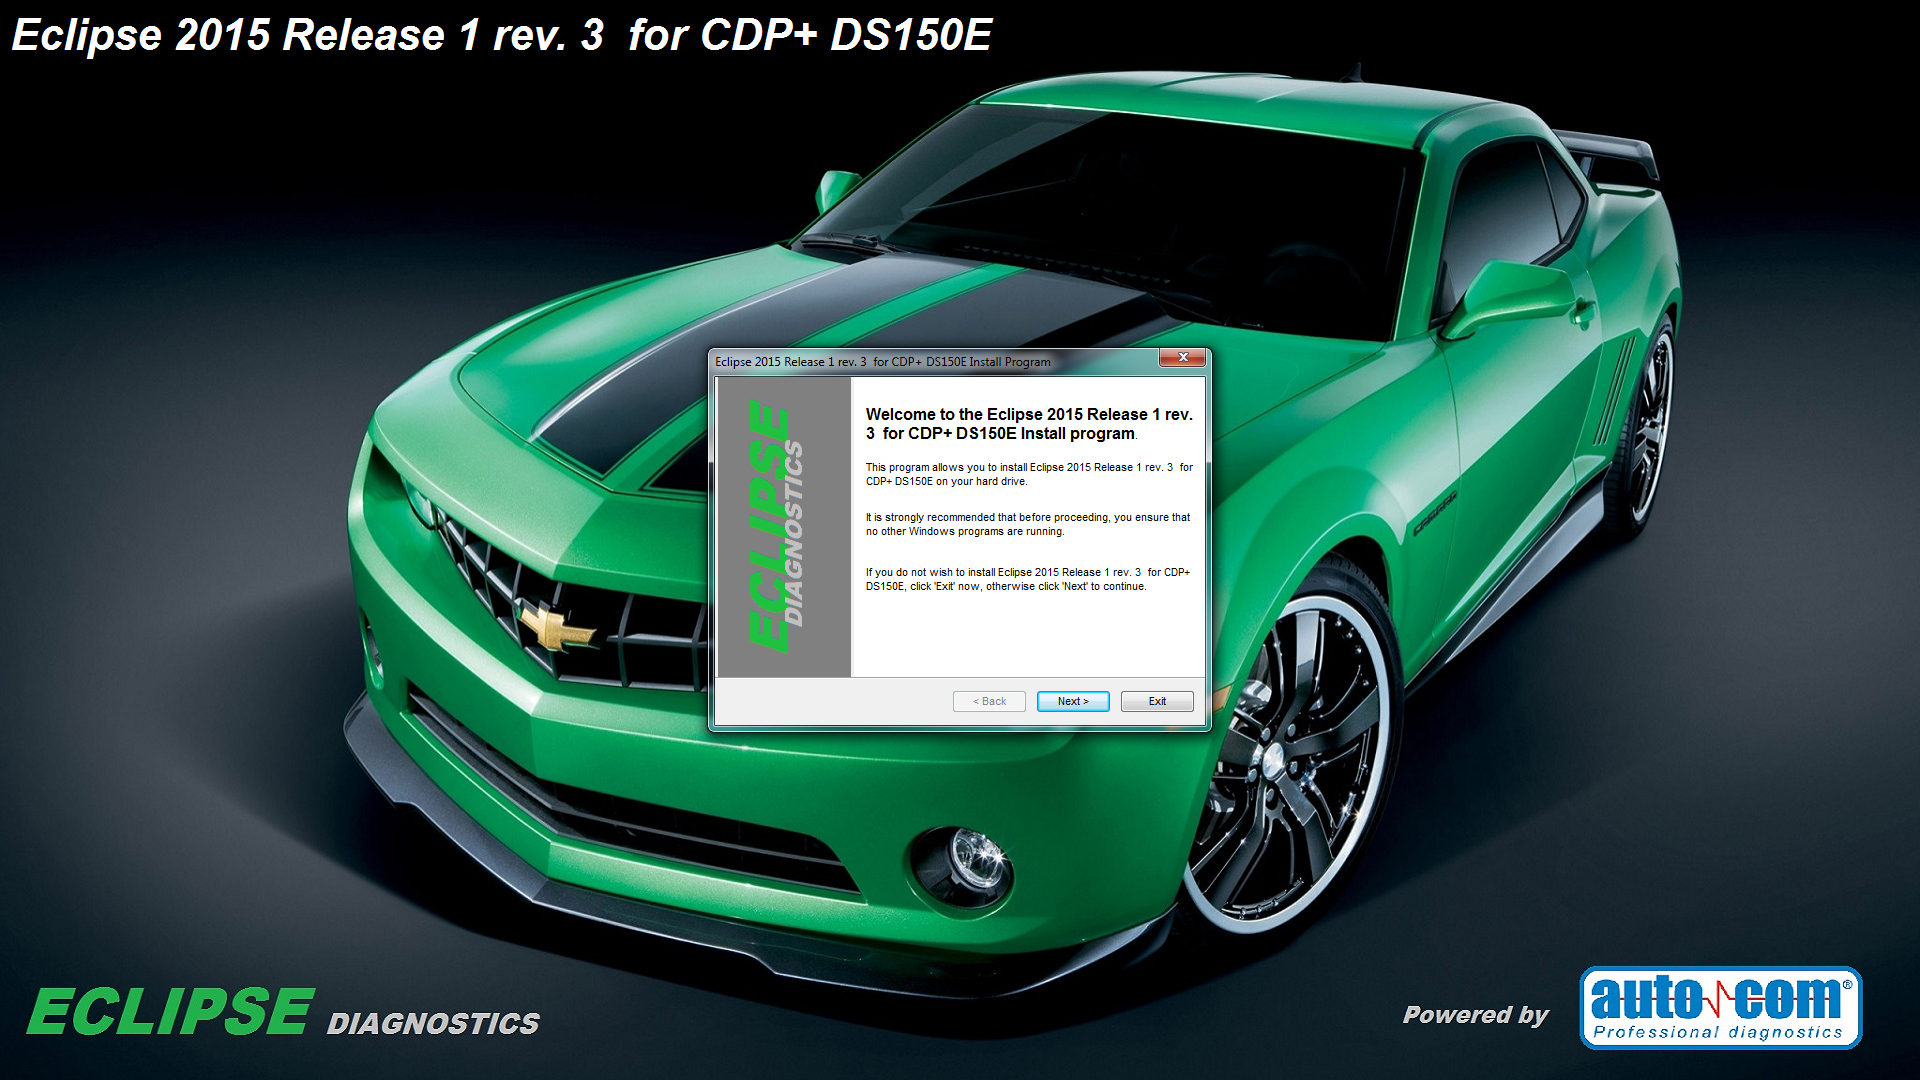 vci autocom diagnostic software download